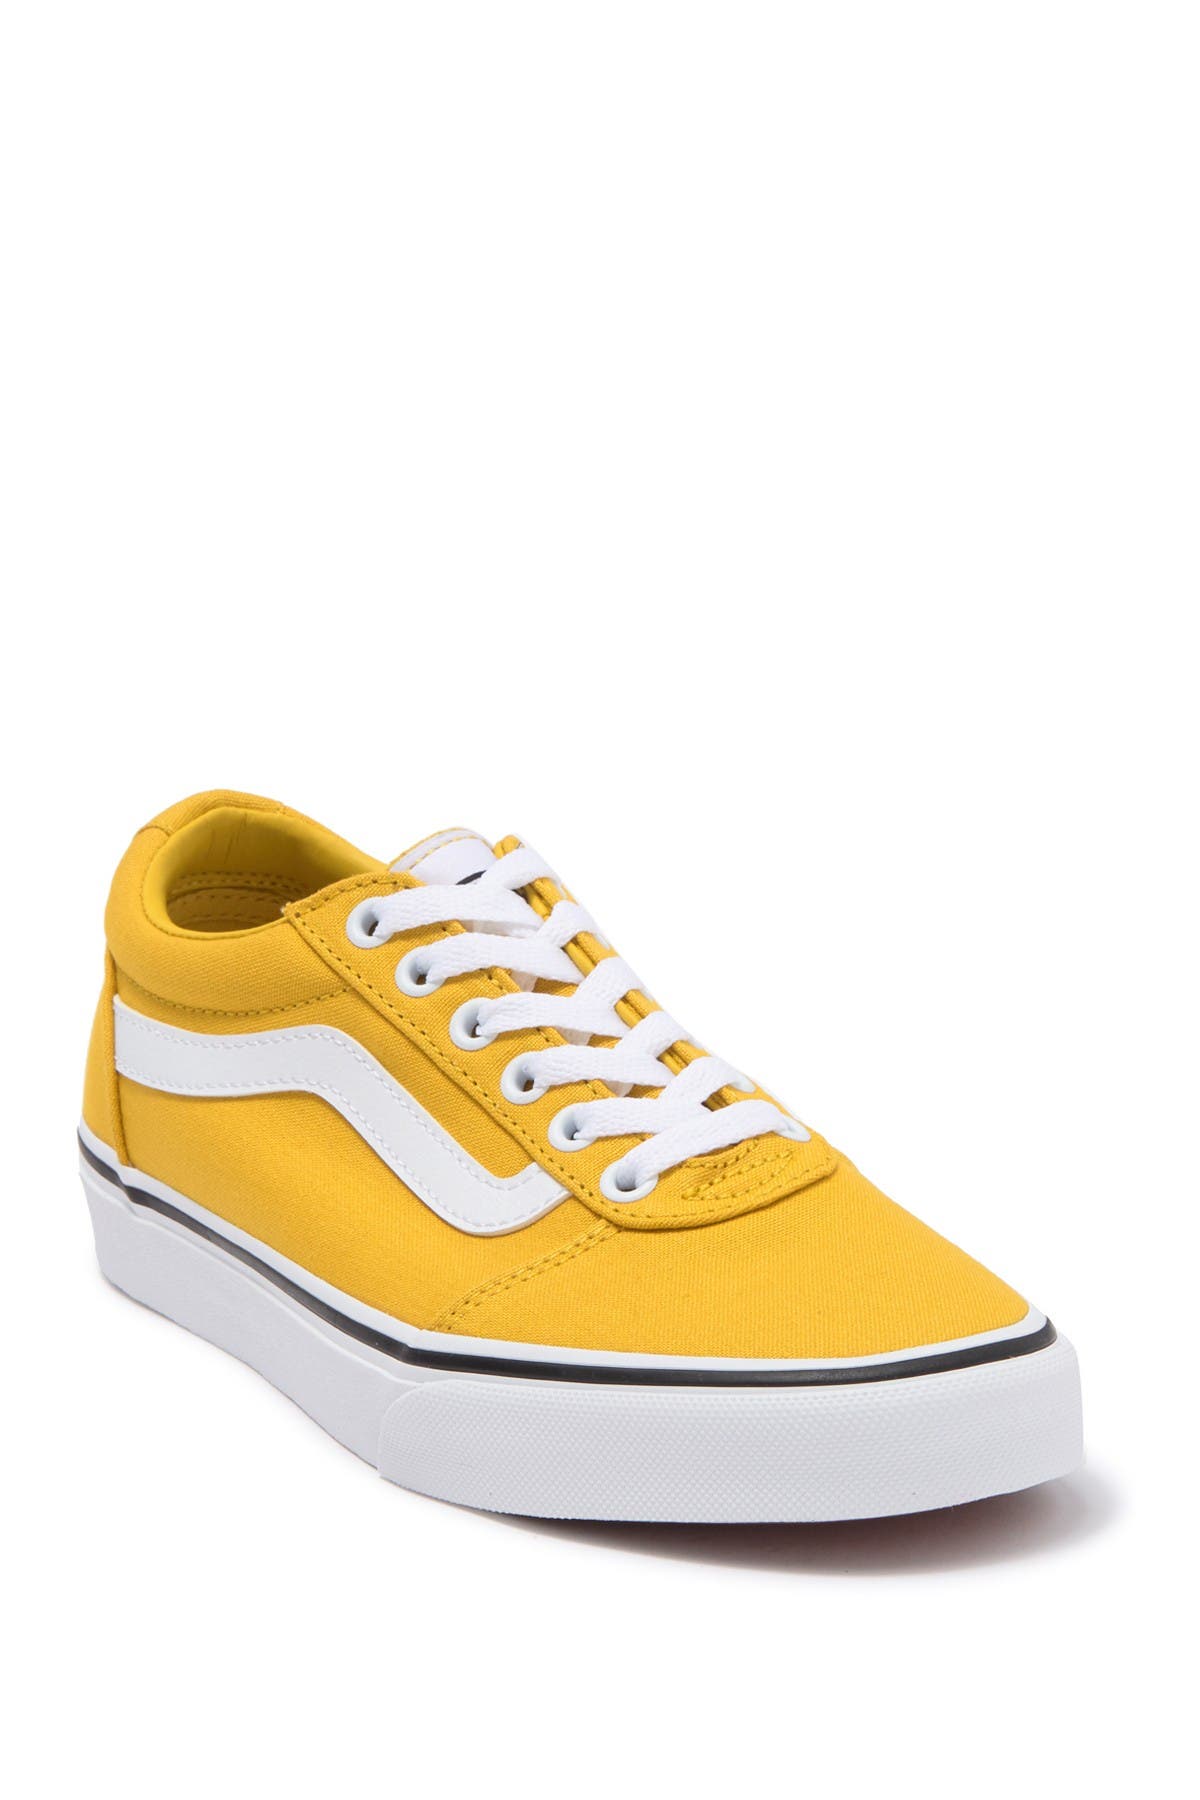 vans ward yellow